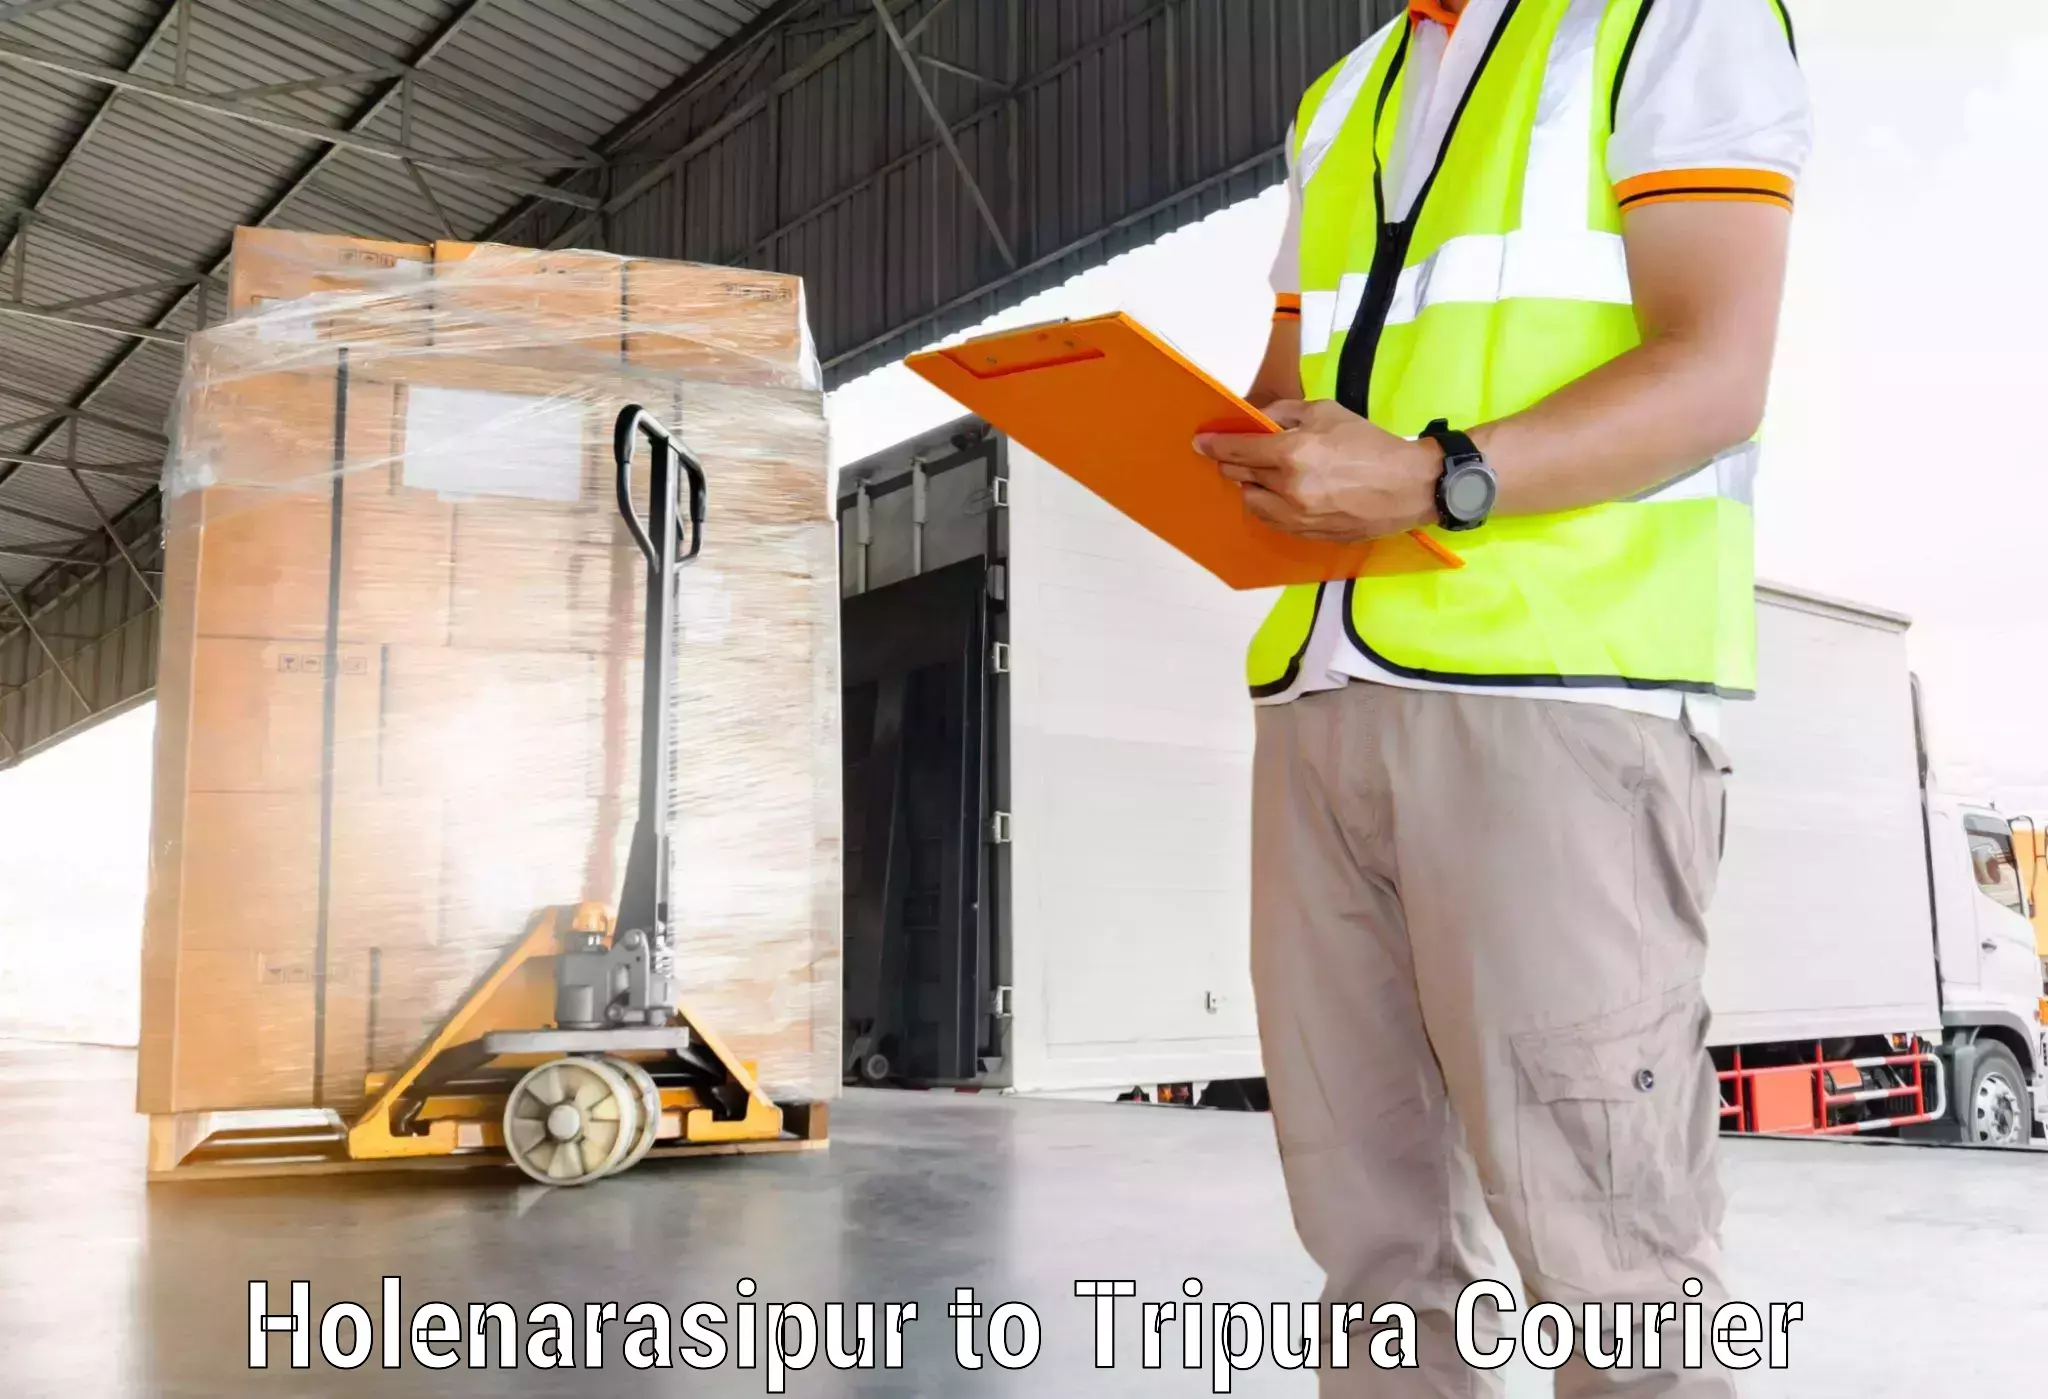 Speedy delivery service Holenarasipur to Agartala